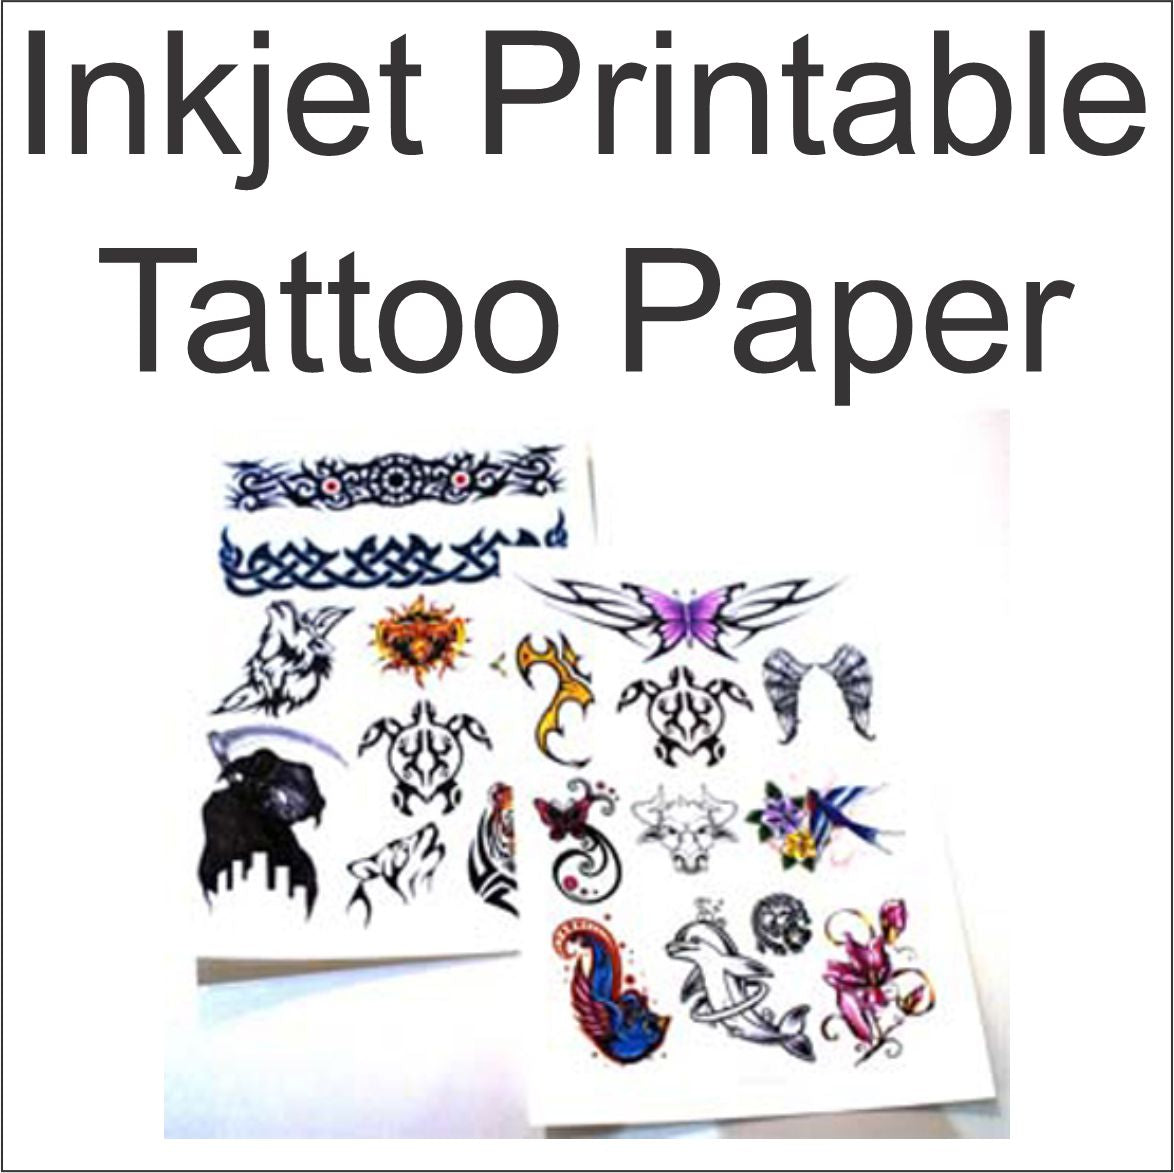 Tattoo Paper - Inkjet Printable 5 Pack